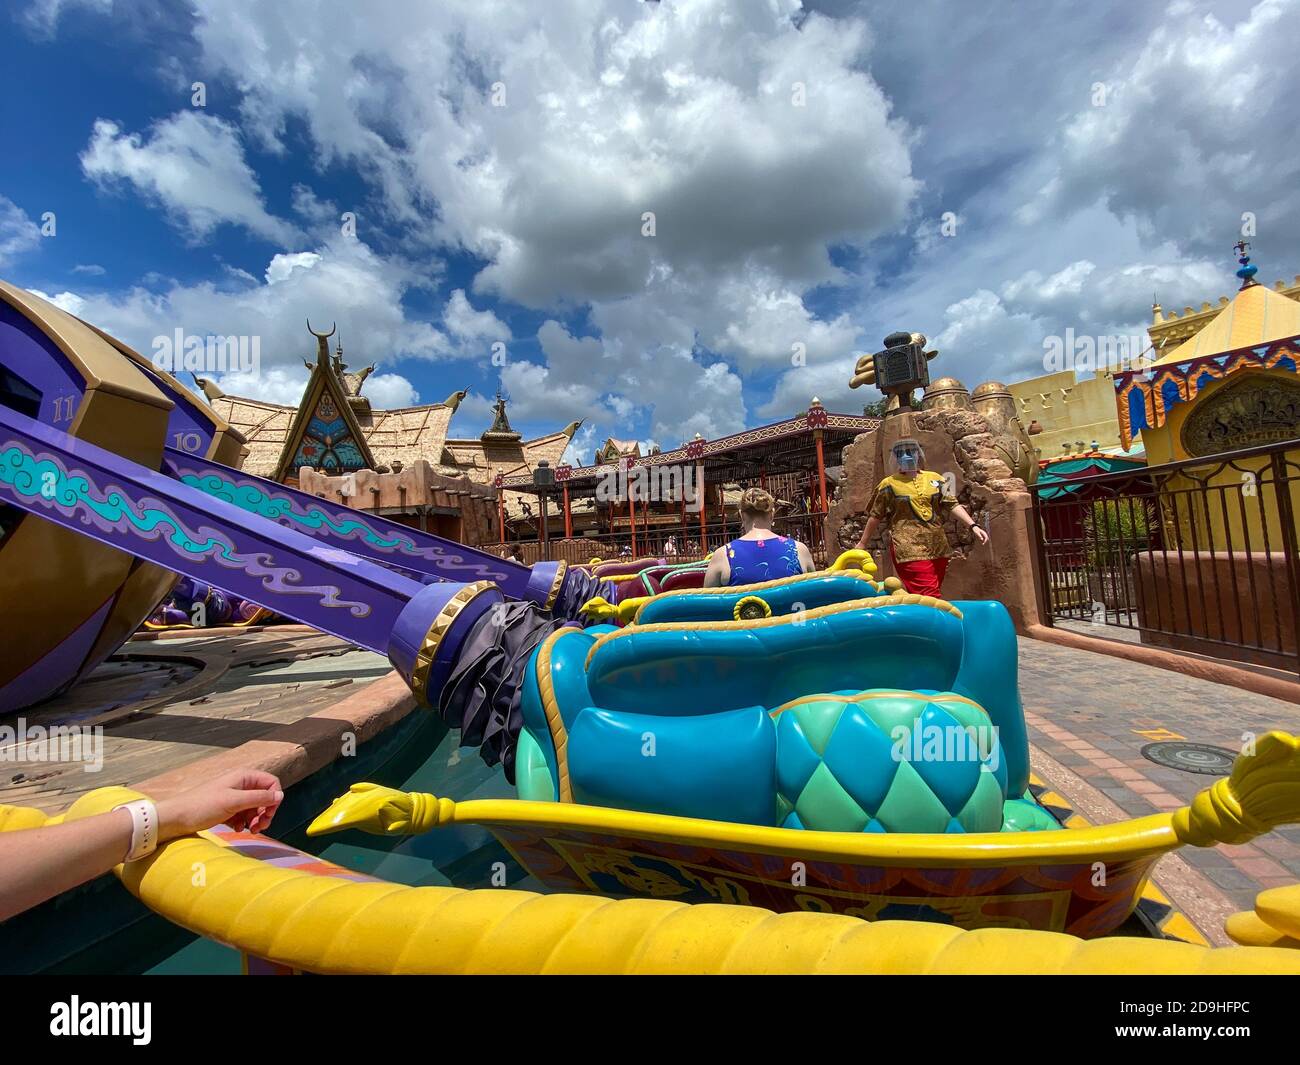 Orlando,FL/USA-7/25/20: The Aladdin Magic Carpets ride in Magic Kingdom in Disney World Orlando, Florida. Stock Photo